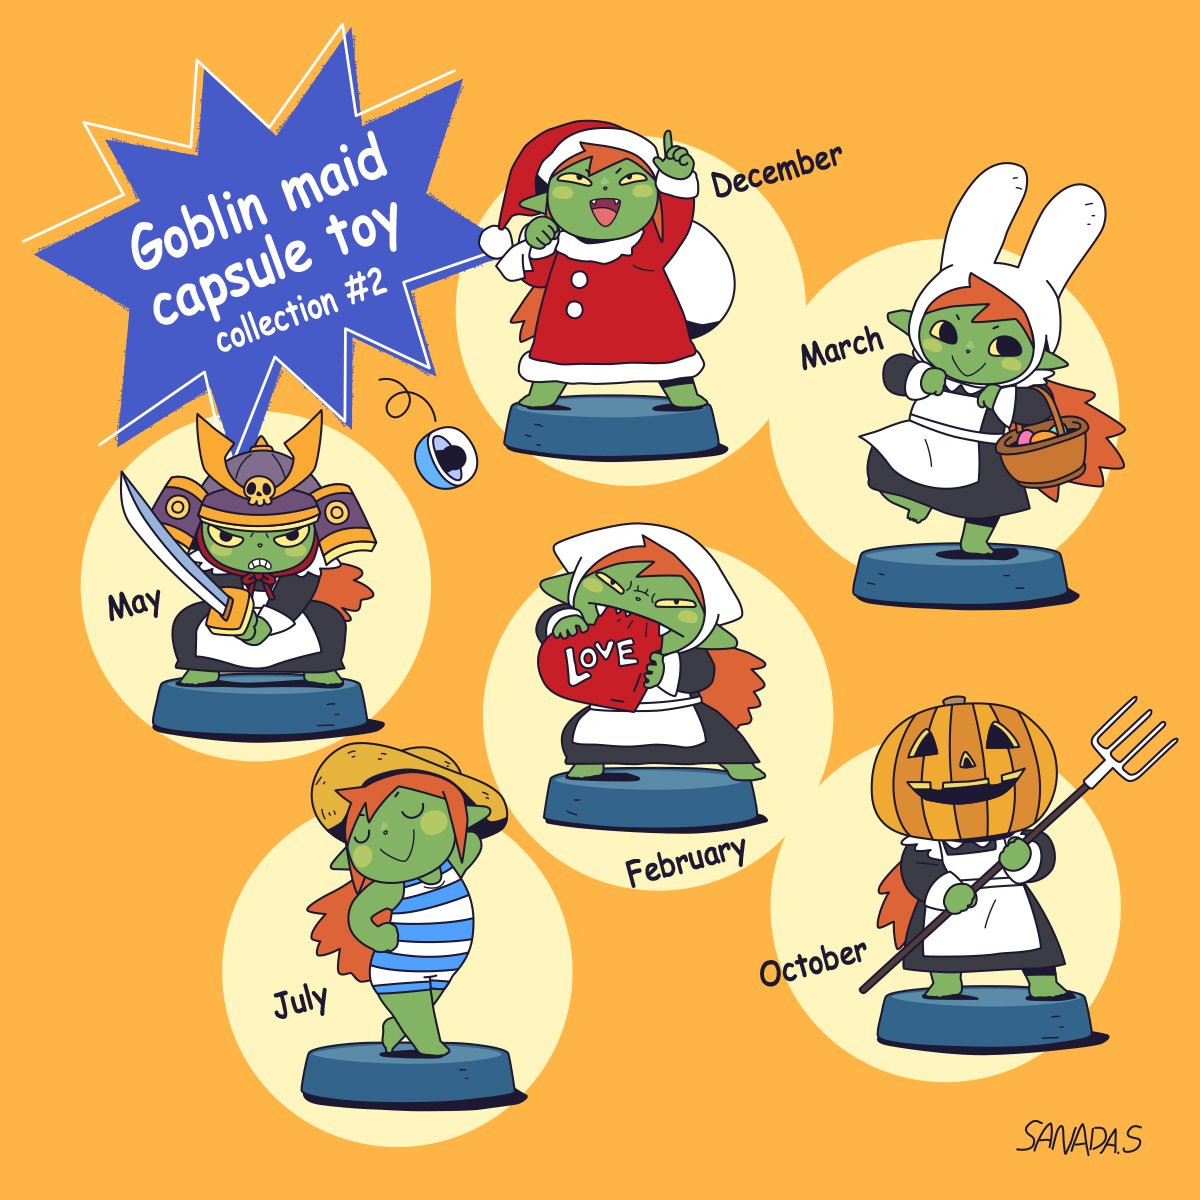 'Goblin maid capsuletoy collection #2!' ゴブリンメイドちゃんガチャ第二弾！…そんなものはありません　#originalcharacter